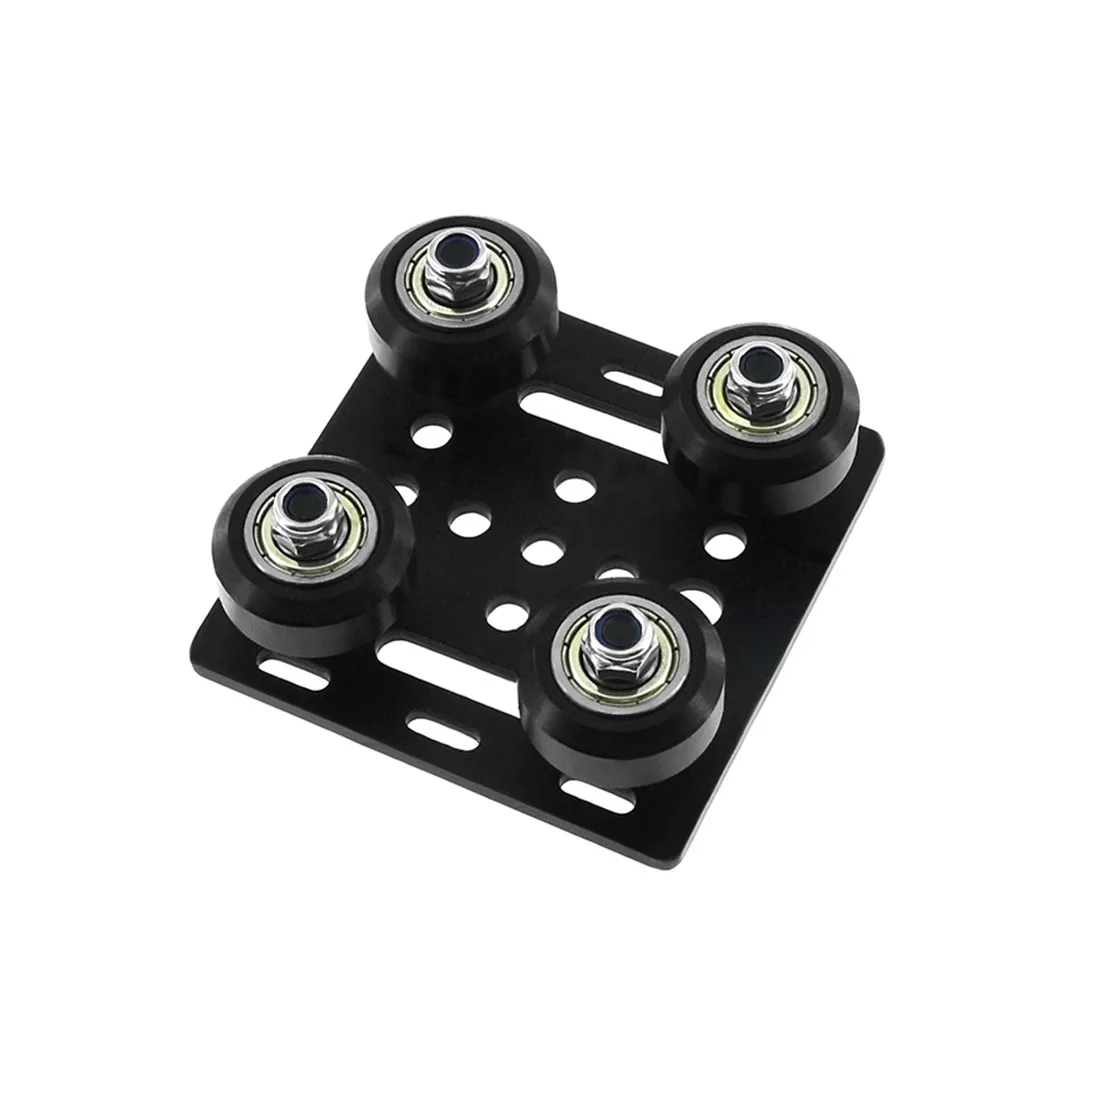 1pc 3D Printer parts Openbuilds V gantry plat special slide plate pulley for 2020/2040 V-slot aluminum profiles wheels